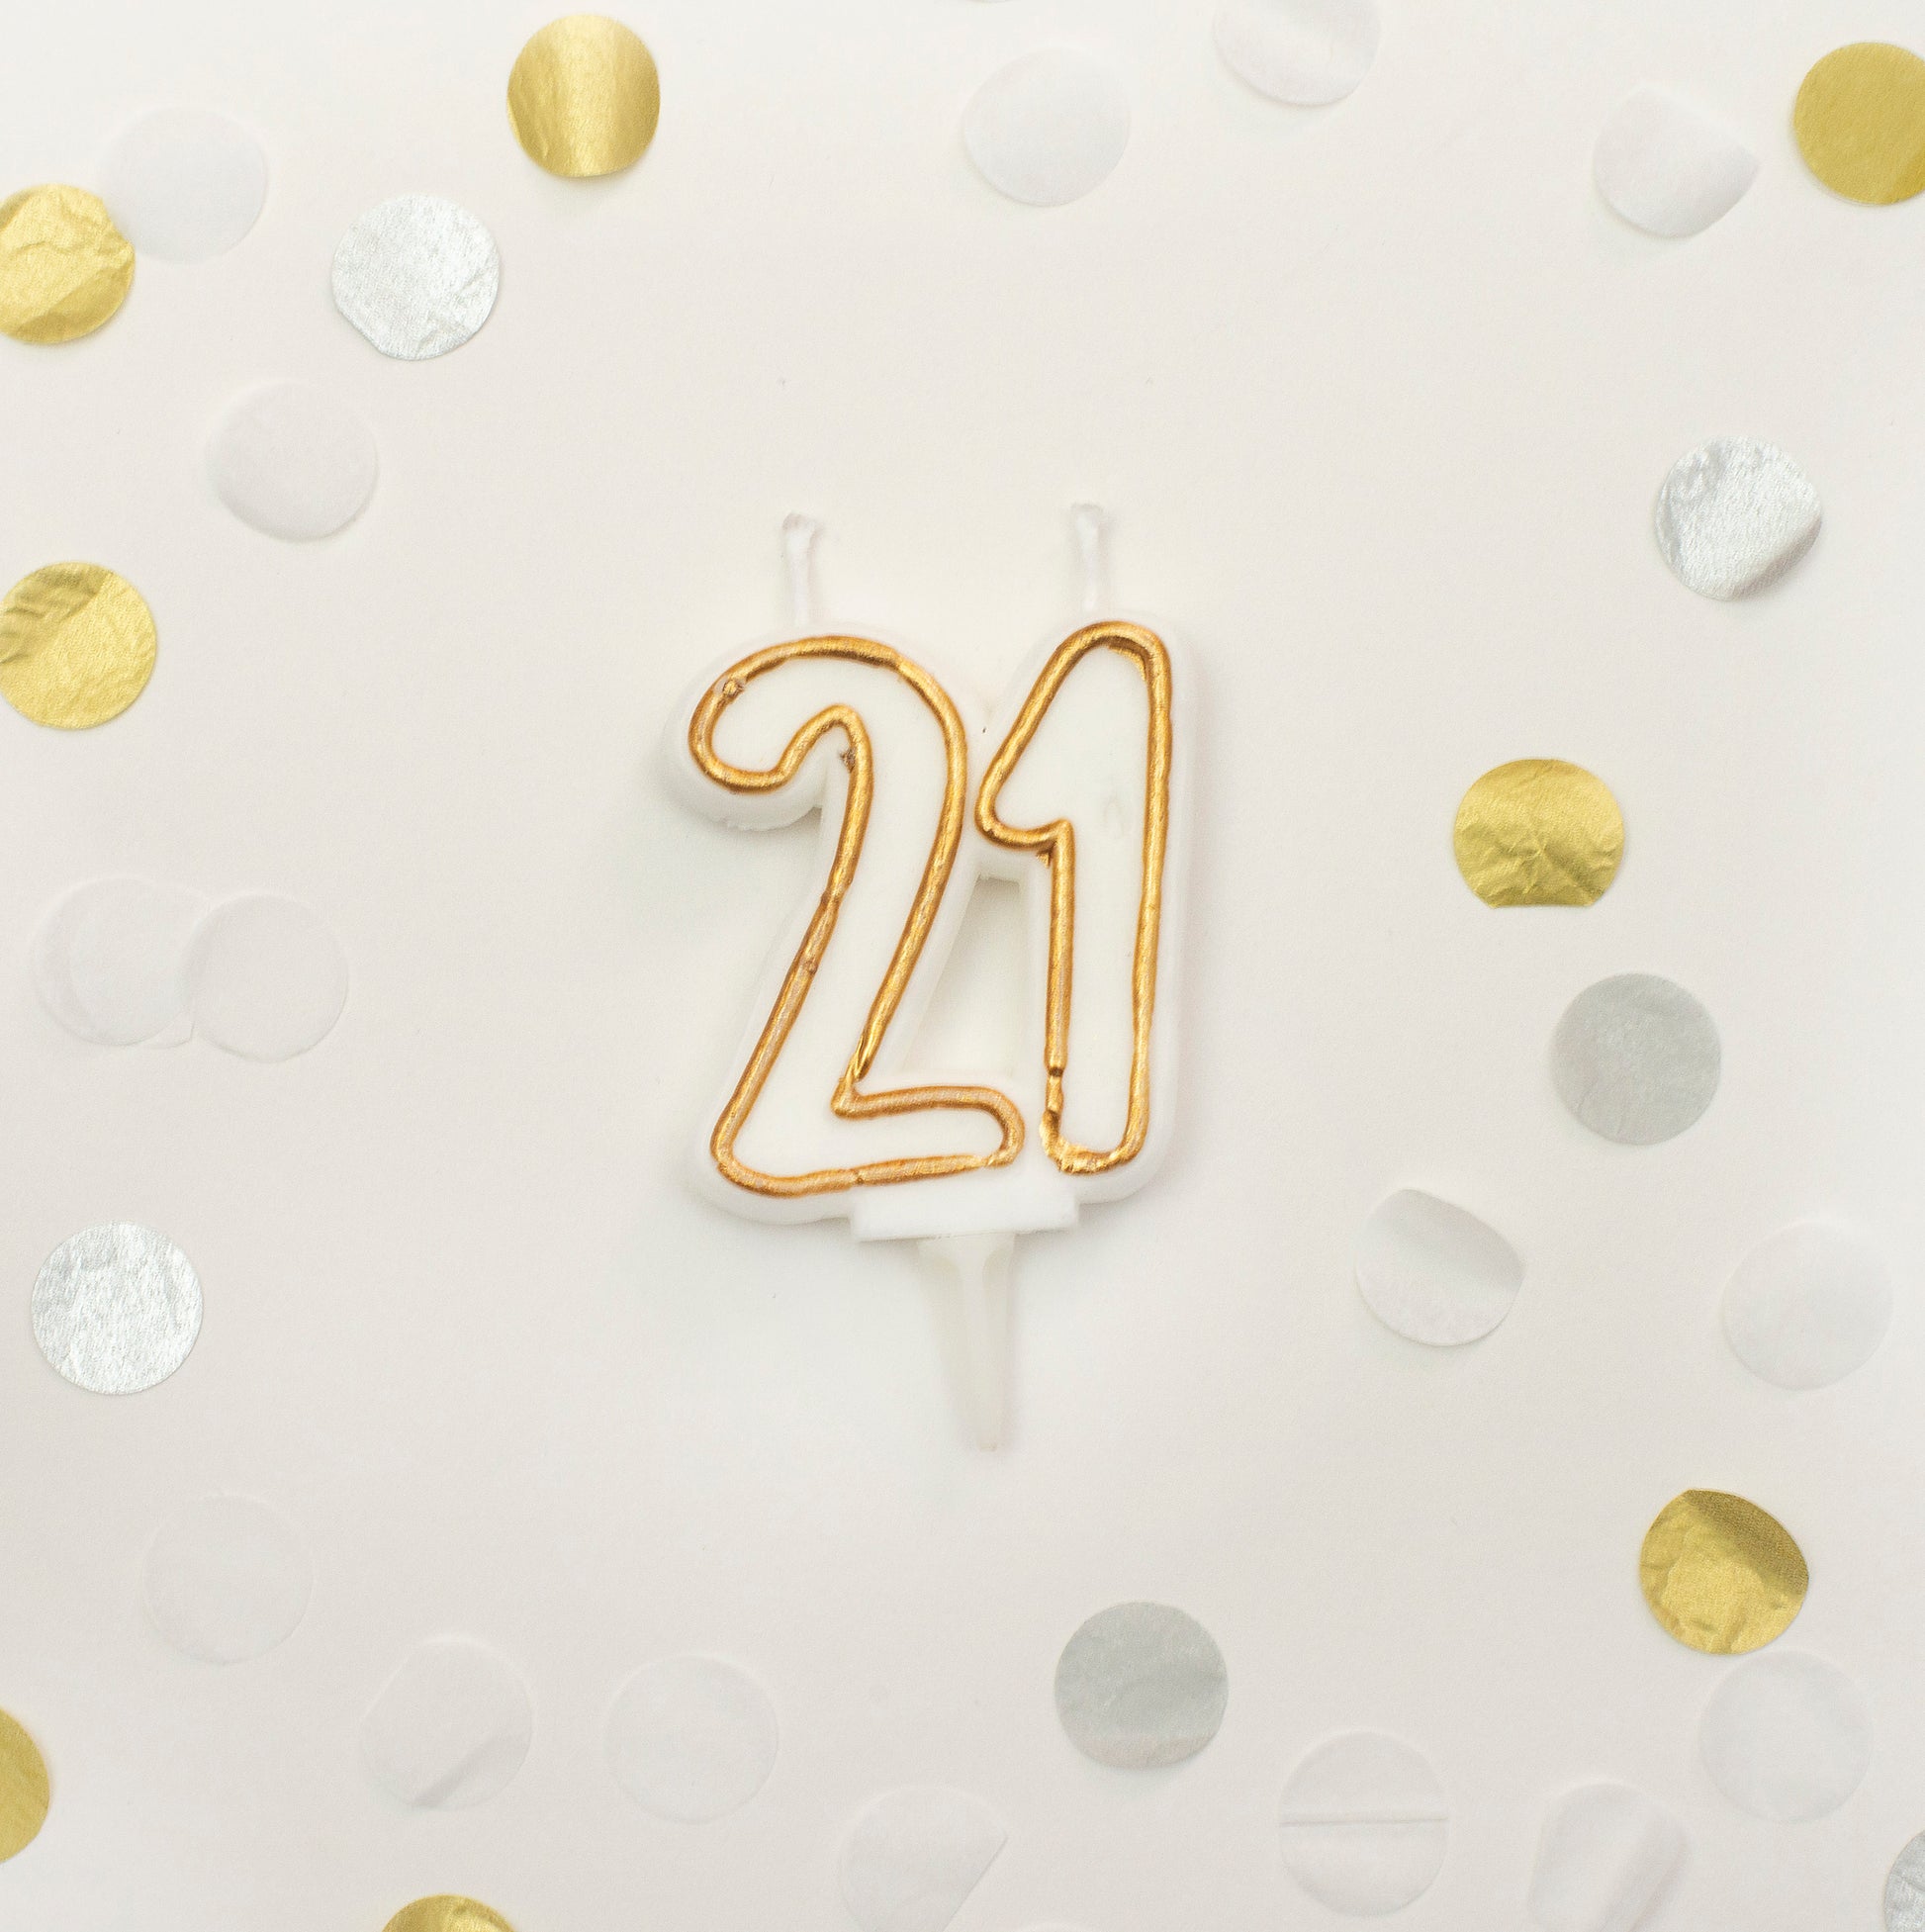 Age 21 Gold Milestone Candle 4